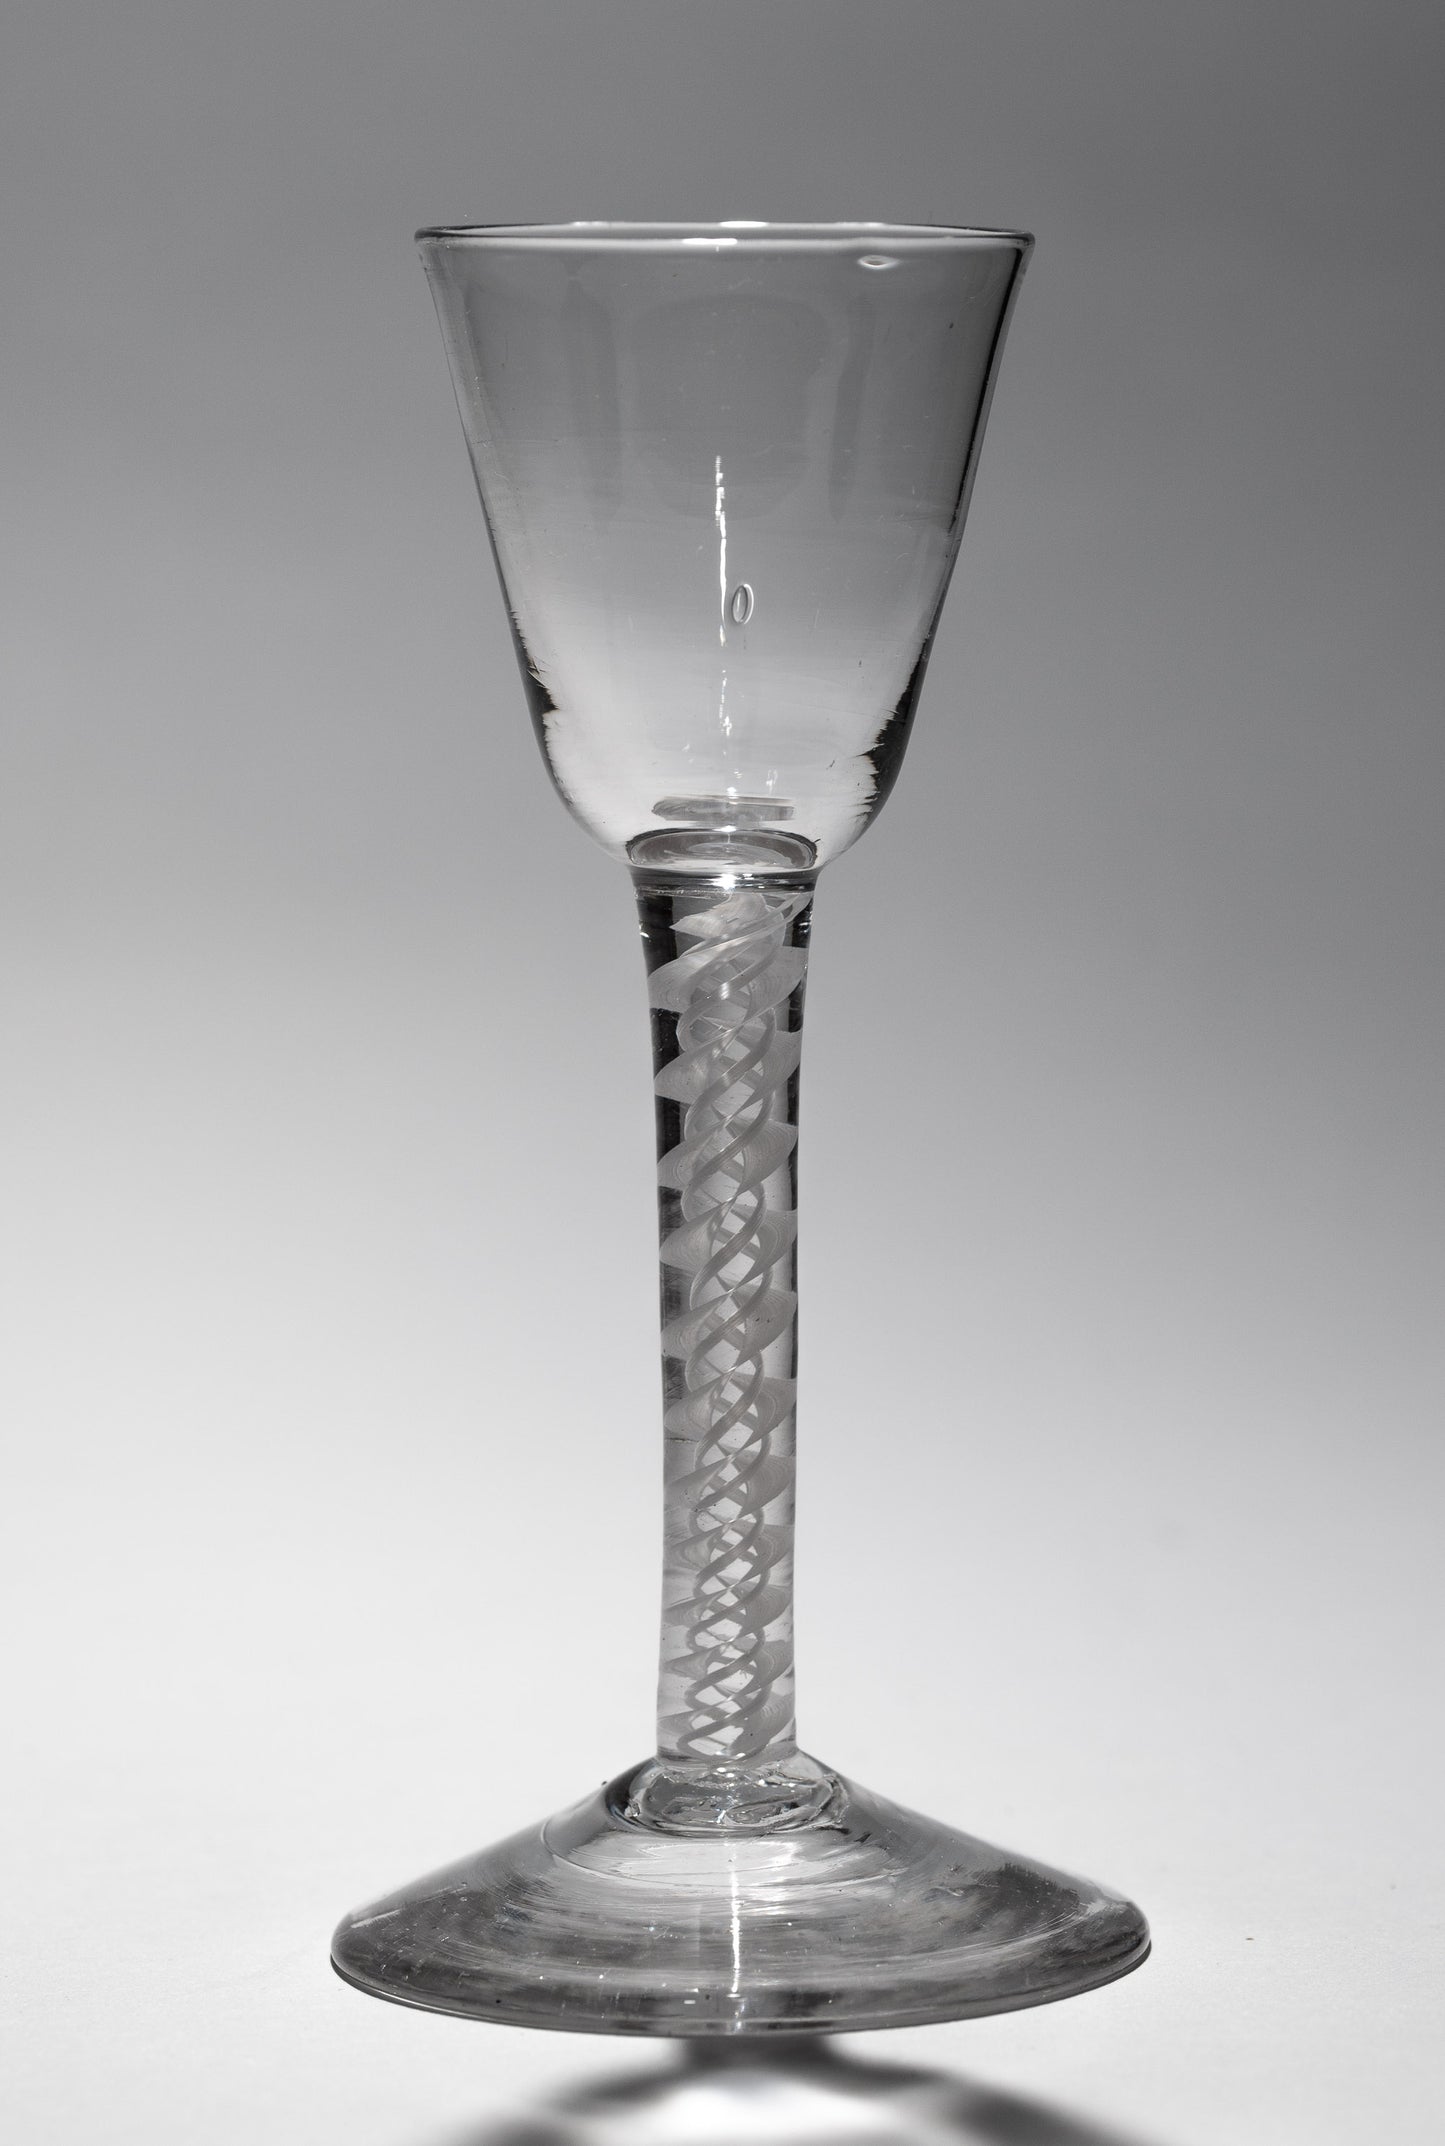 Georgian English Lead Wine Glass with DSOT Opaque Twist Stem - Antique c1760 (3156)